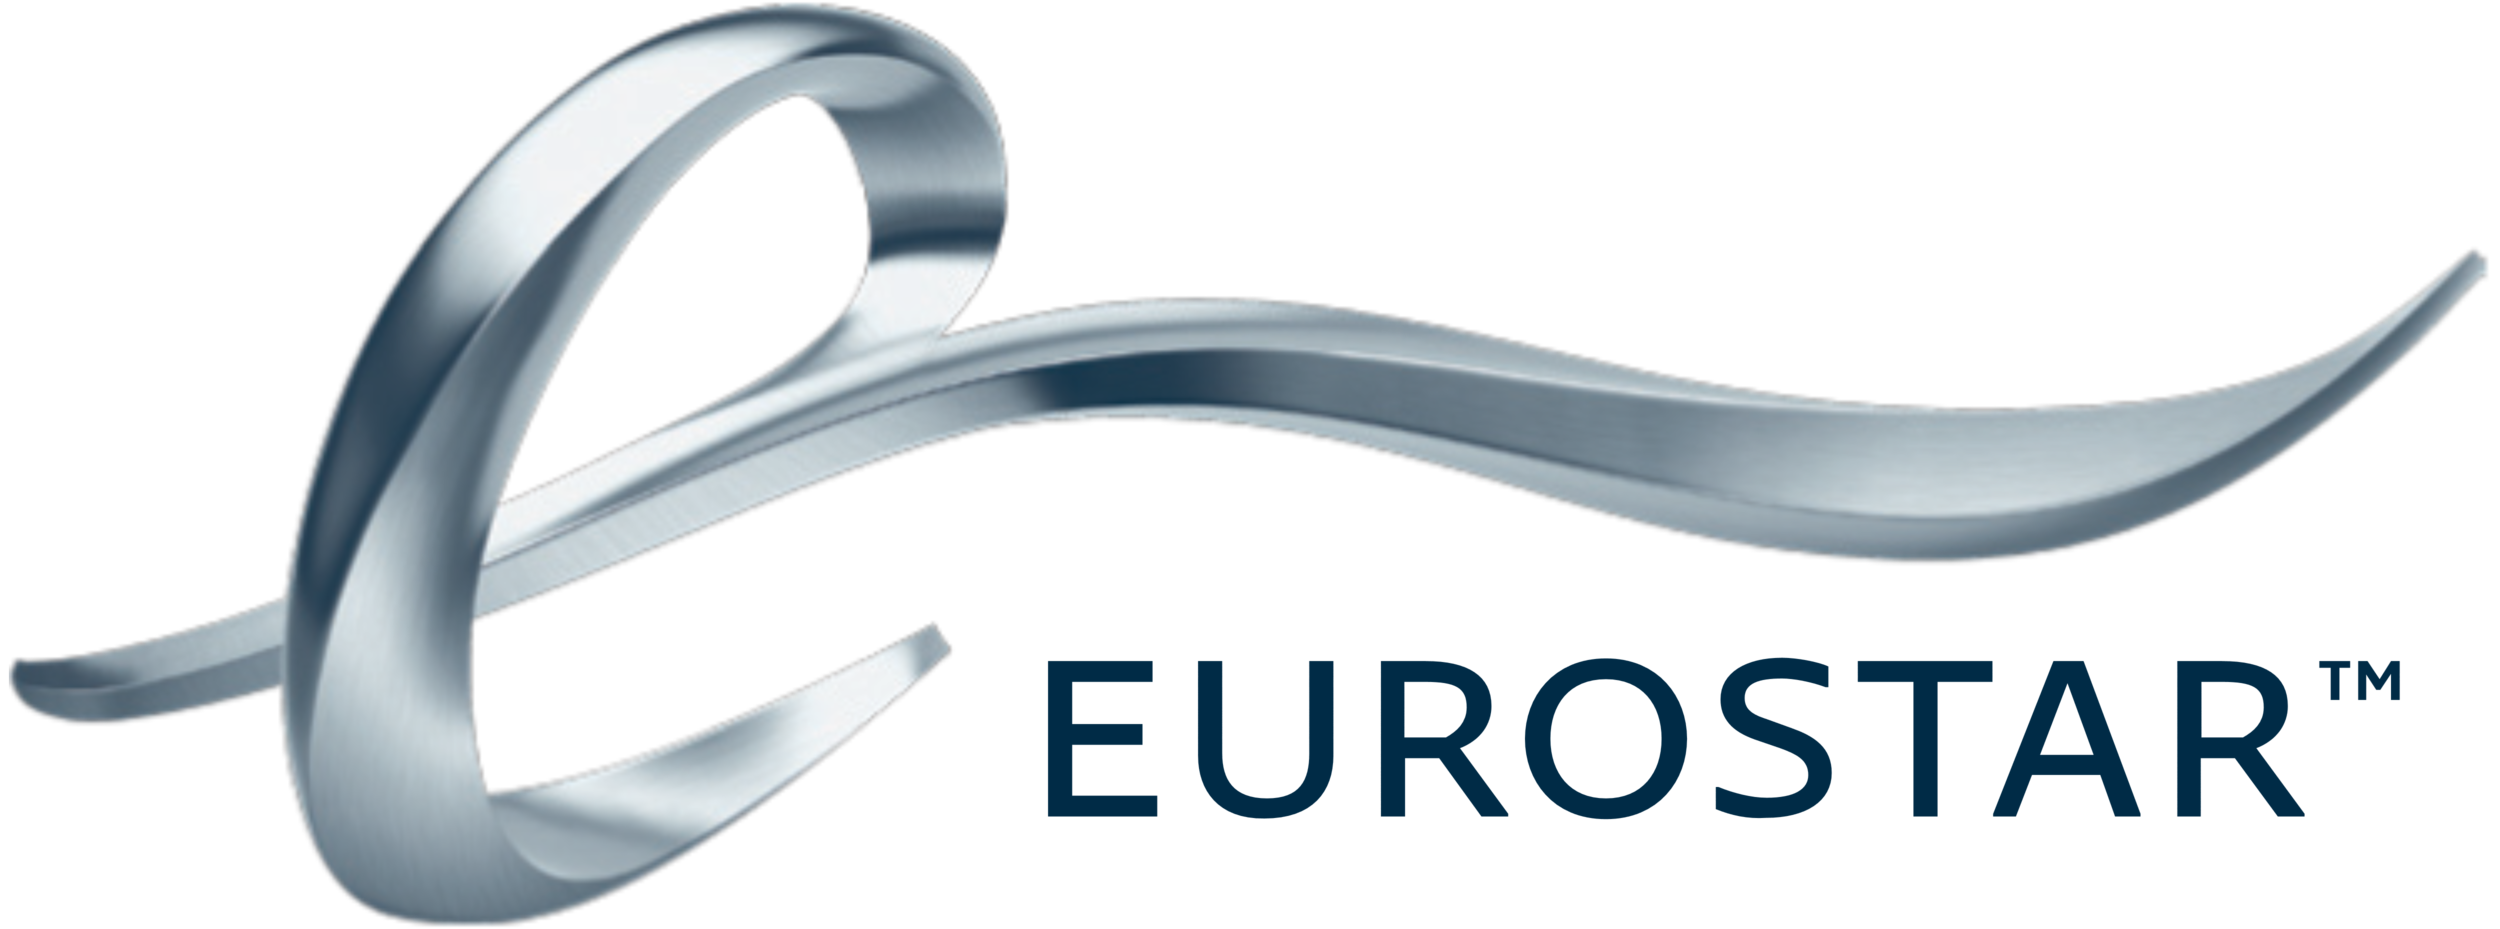 Eurostar_logo_logotype_emblem.png